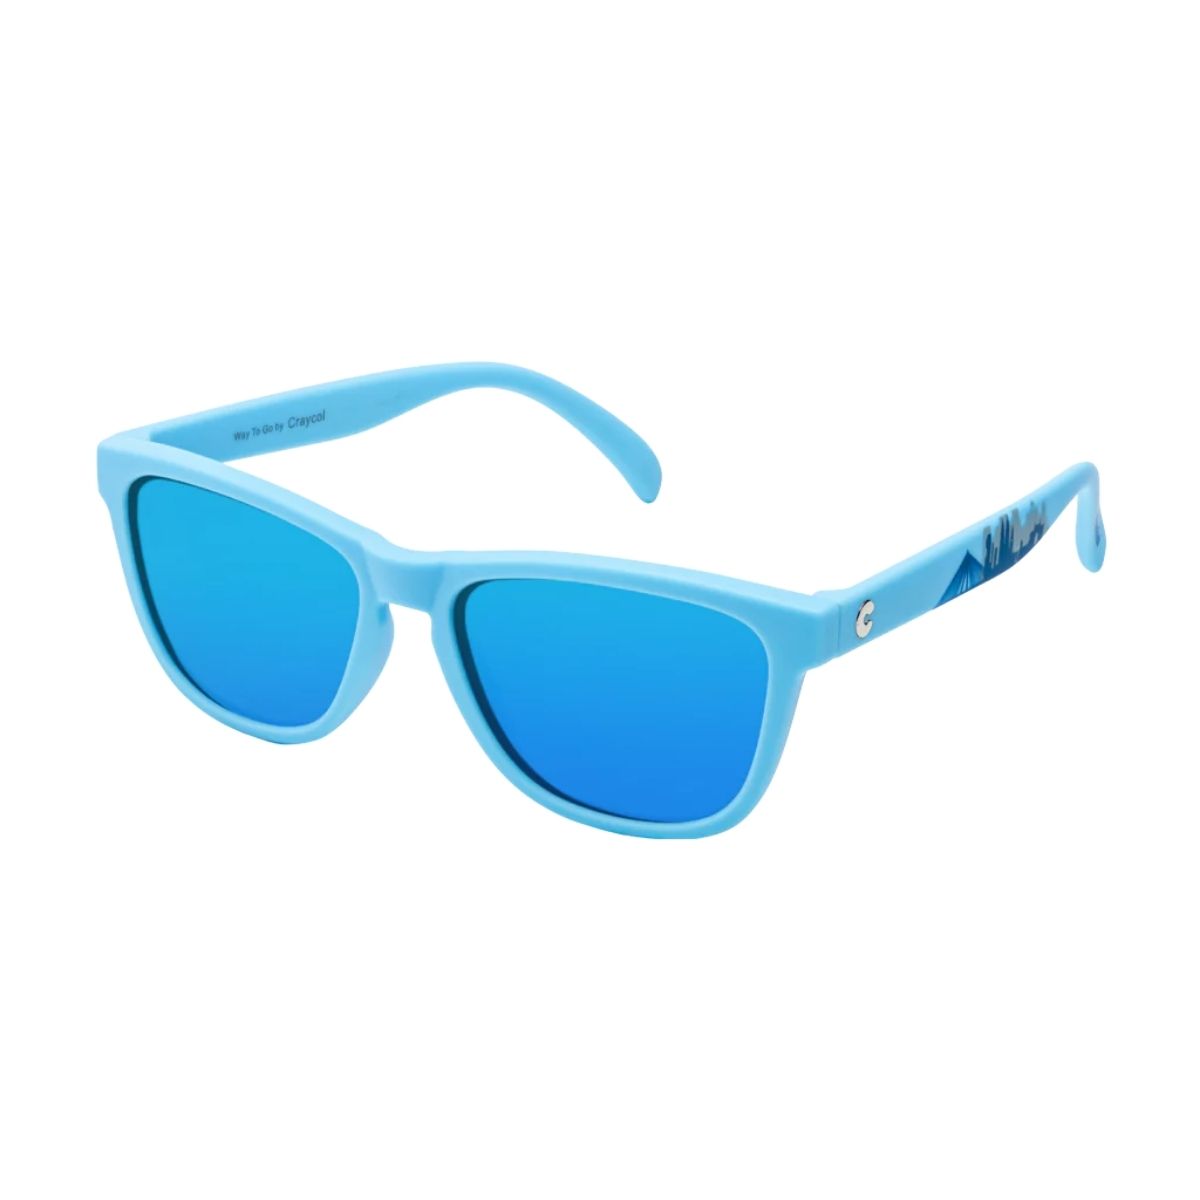 Kasa Kai - Sky Blue Sunglasses